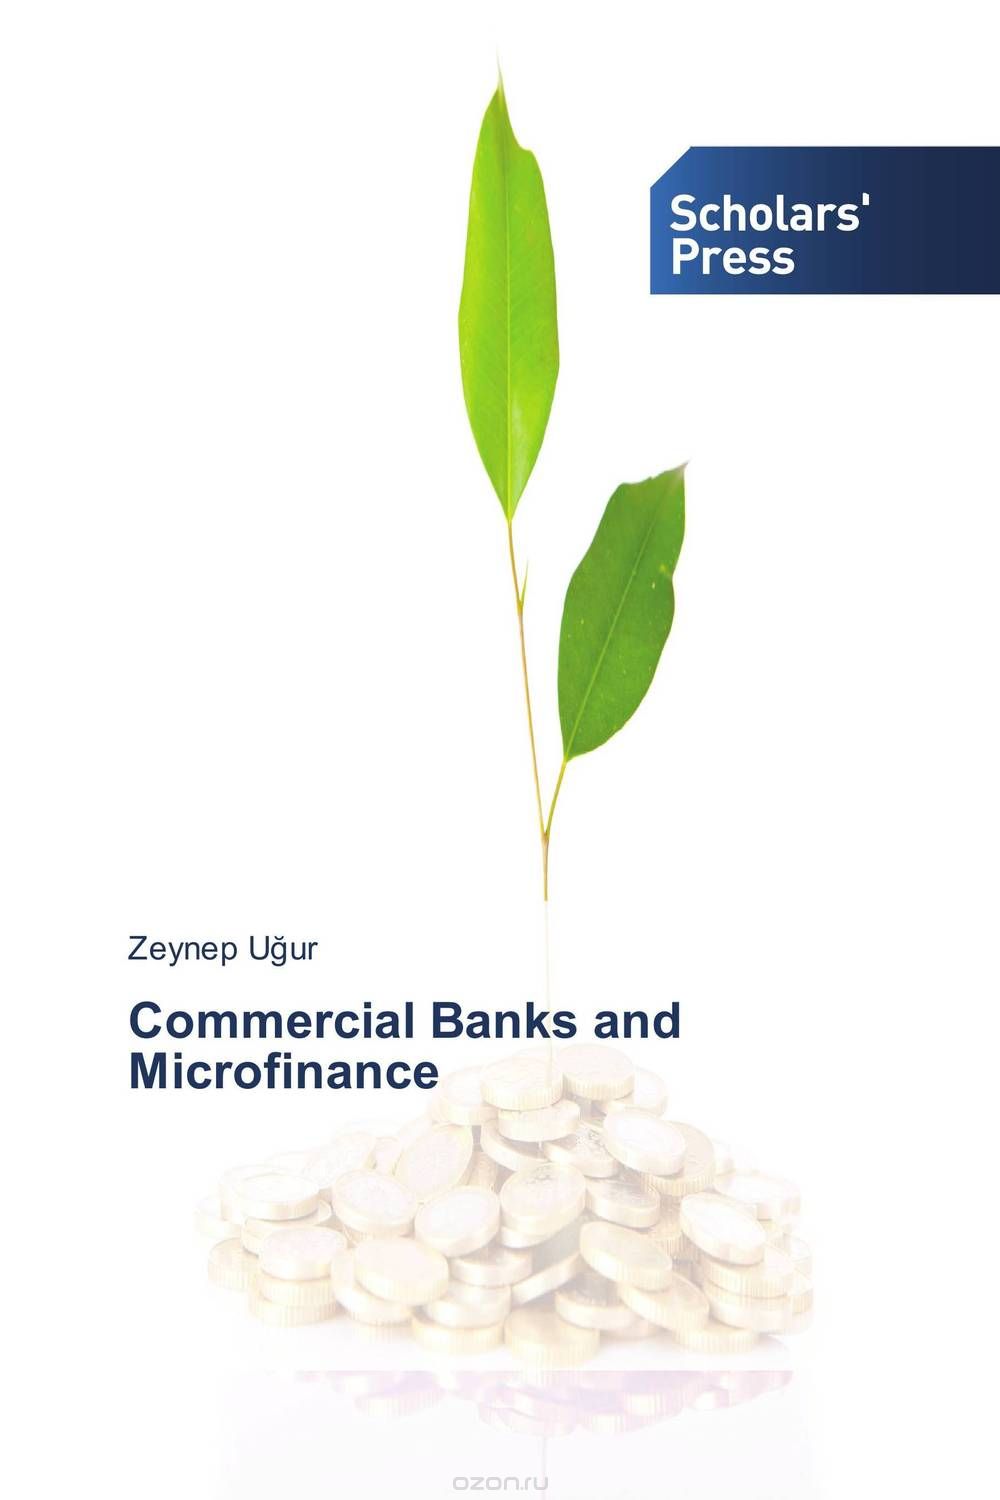 Скачать книгу "Commercial Banks and Microfinance"